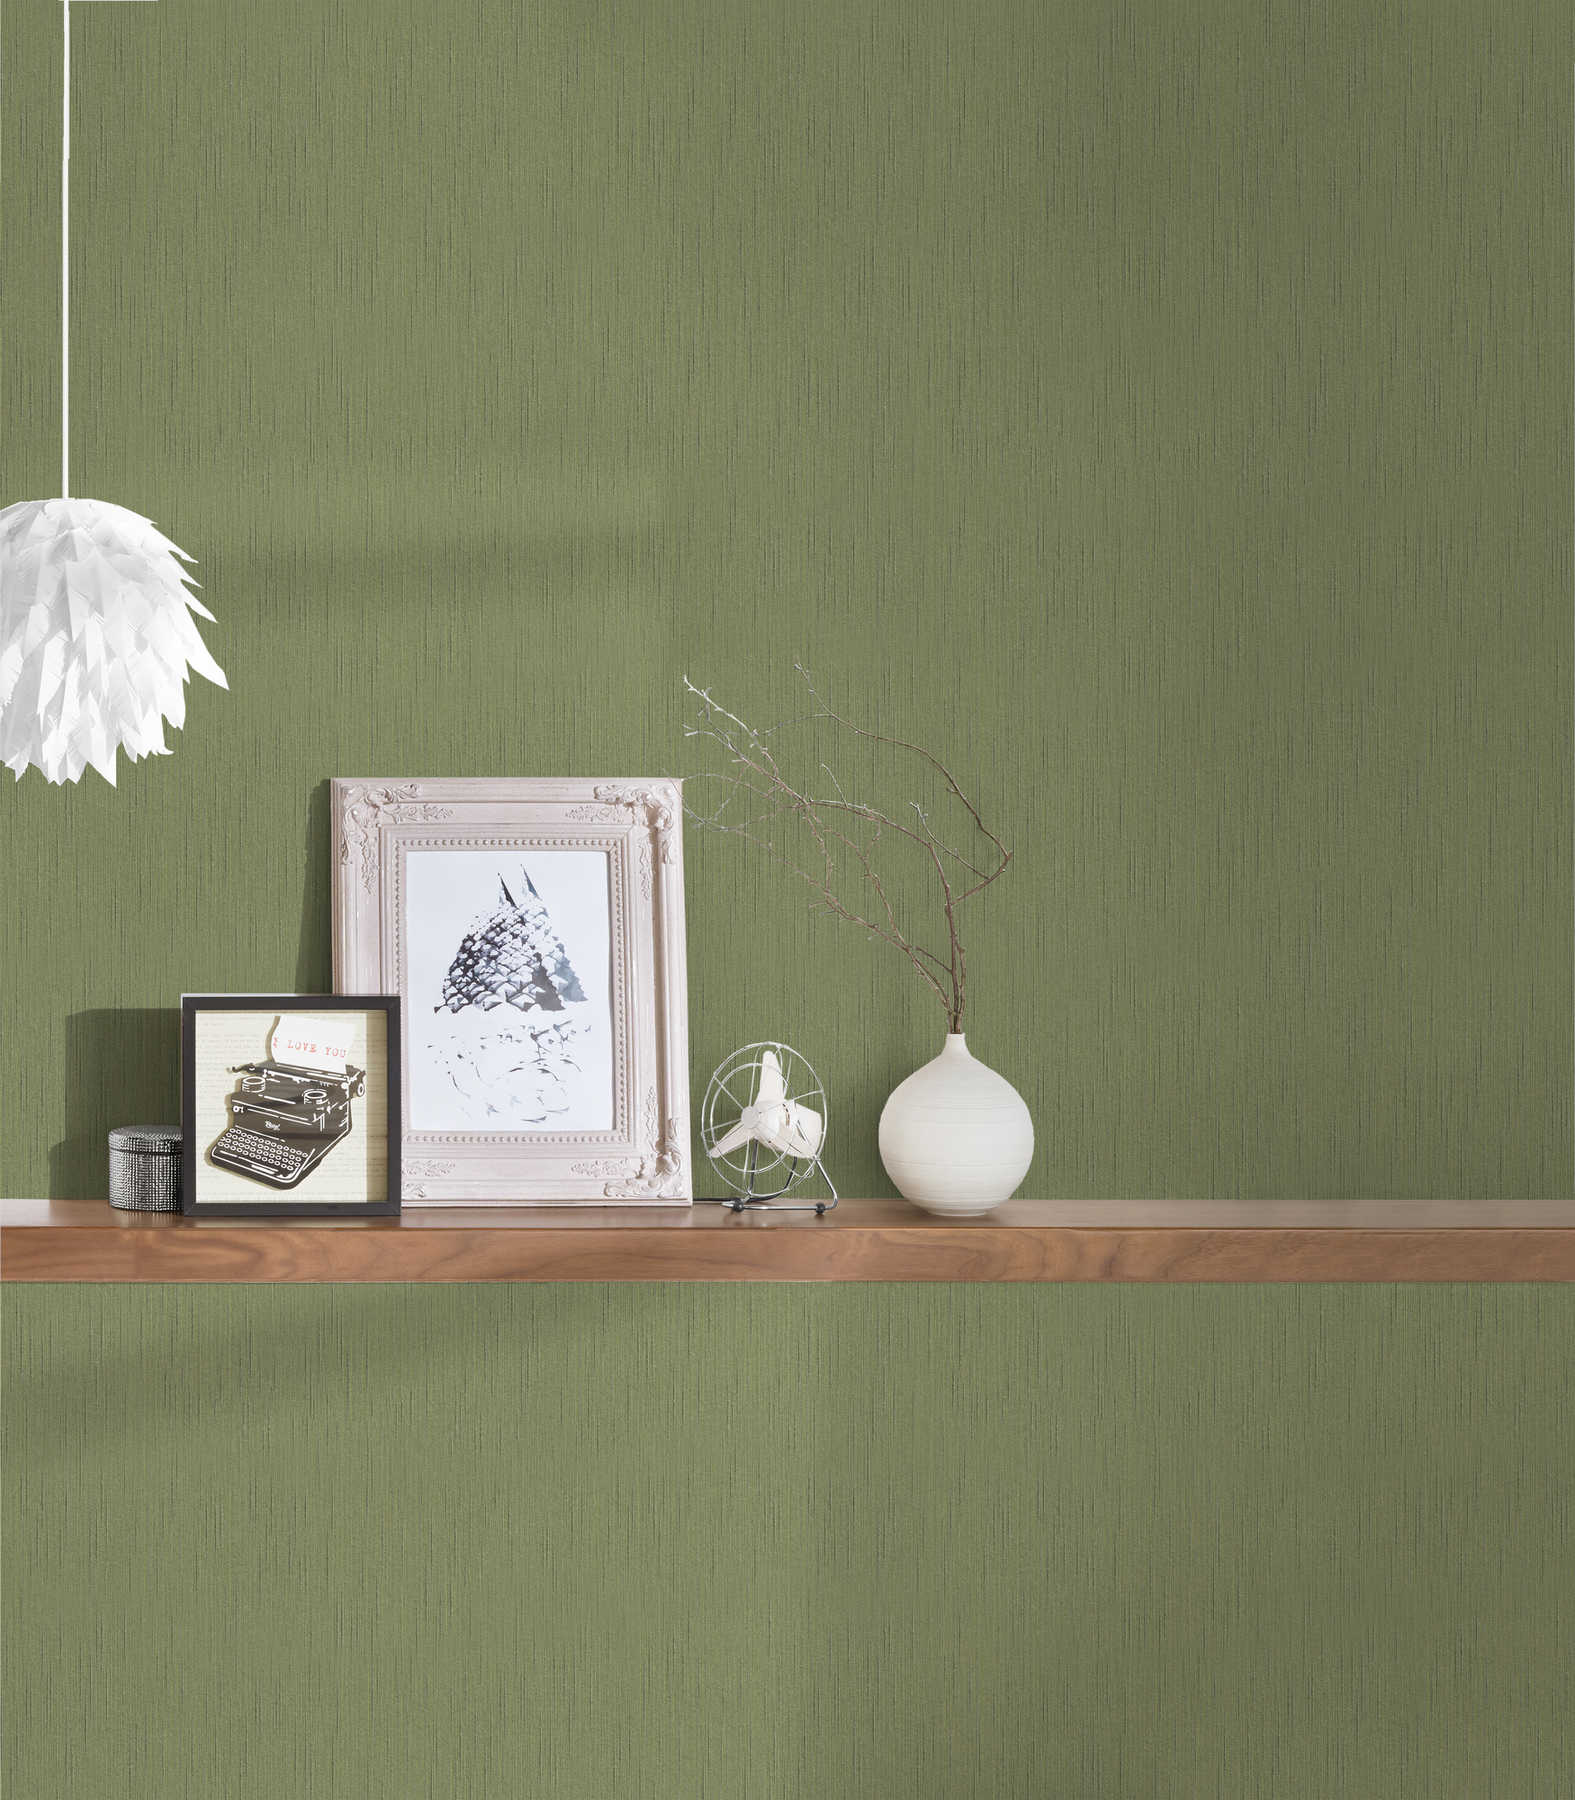             Dark green non-woven wallpaper with mottled texture - green
        